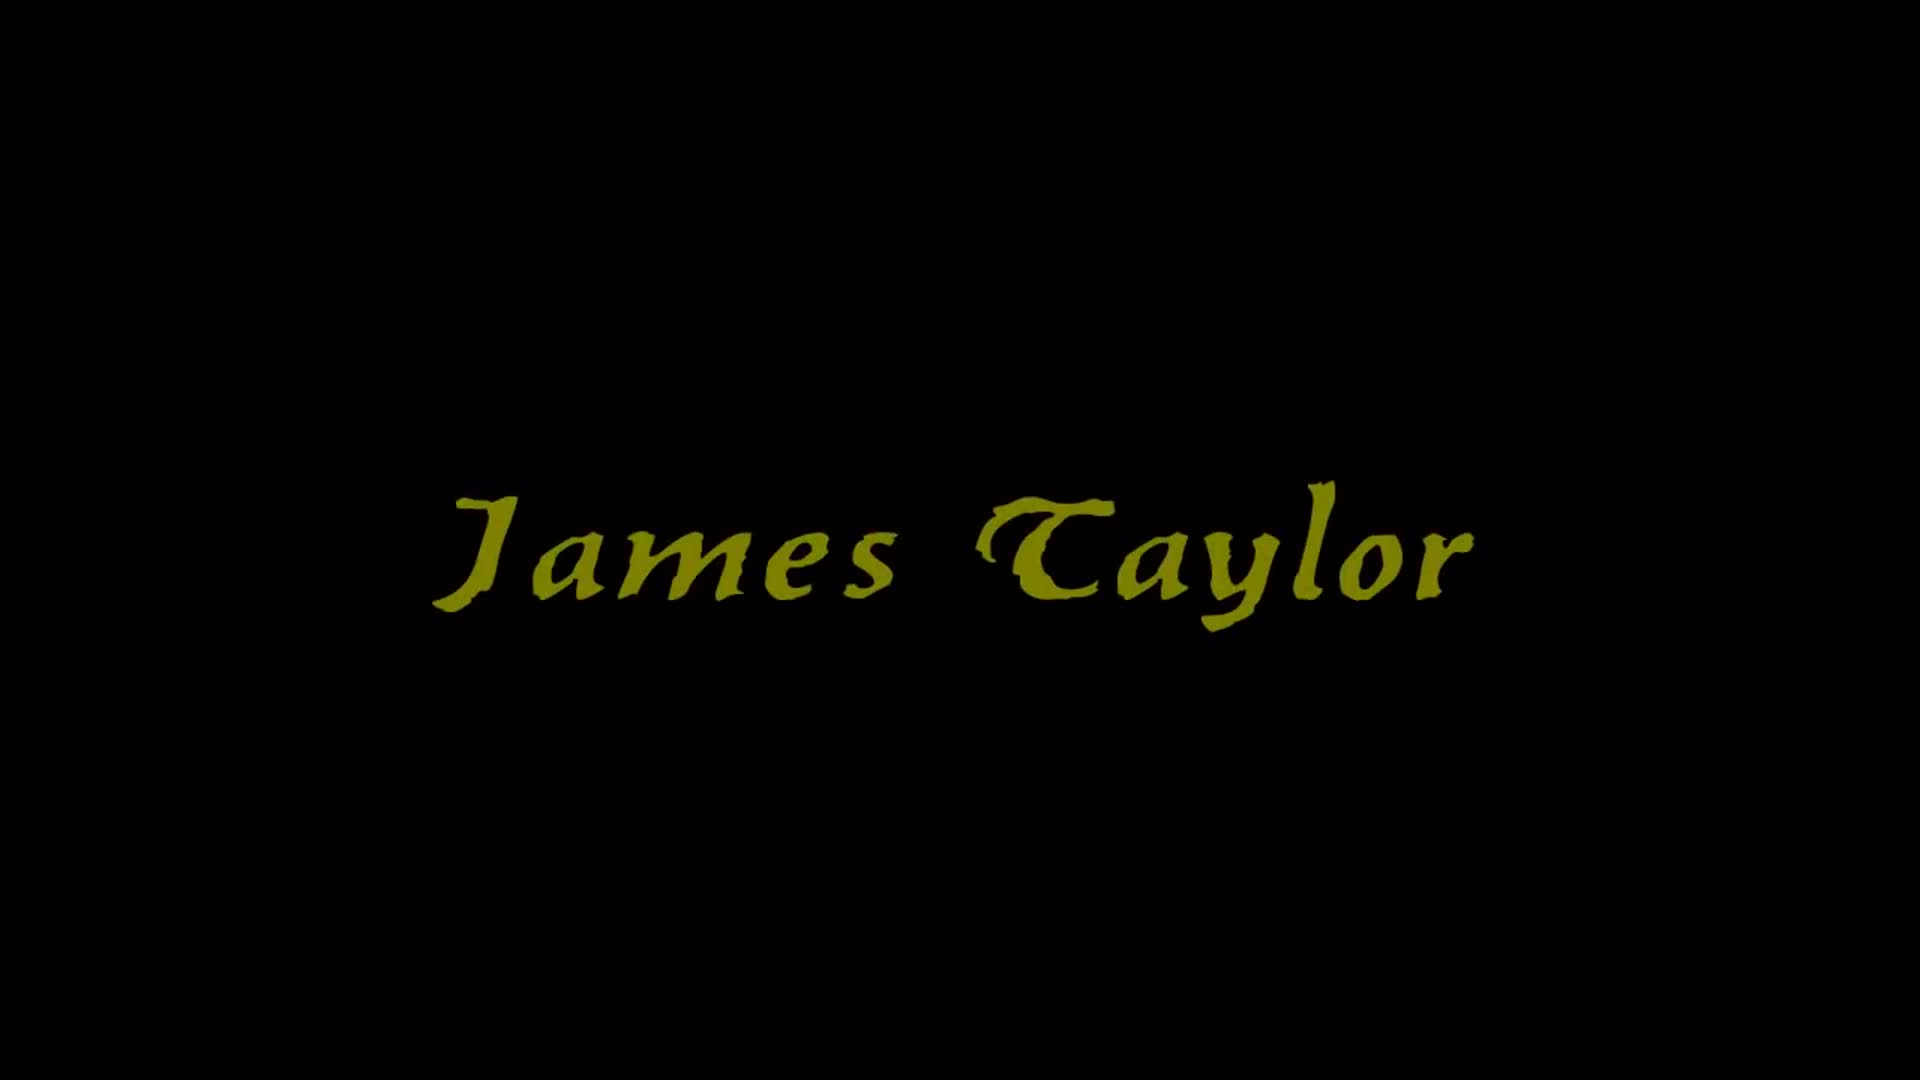 James Taylor - Fire and Rain Music Video - Music - 4fun.com